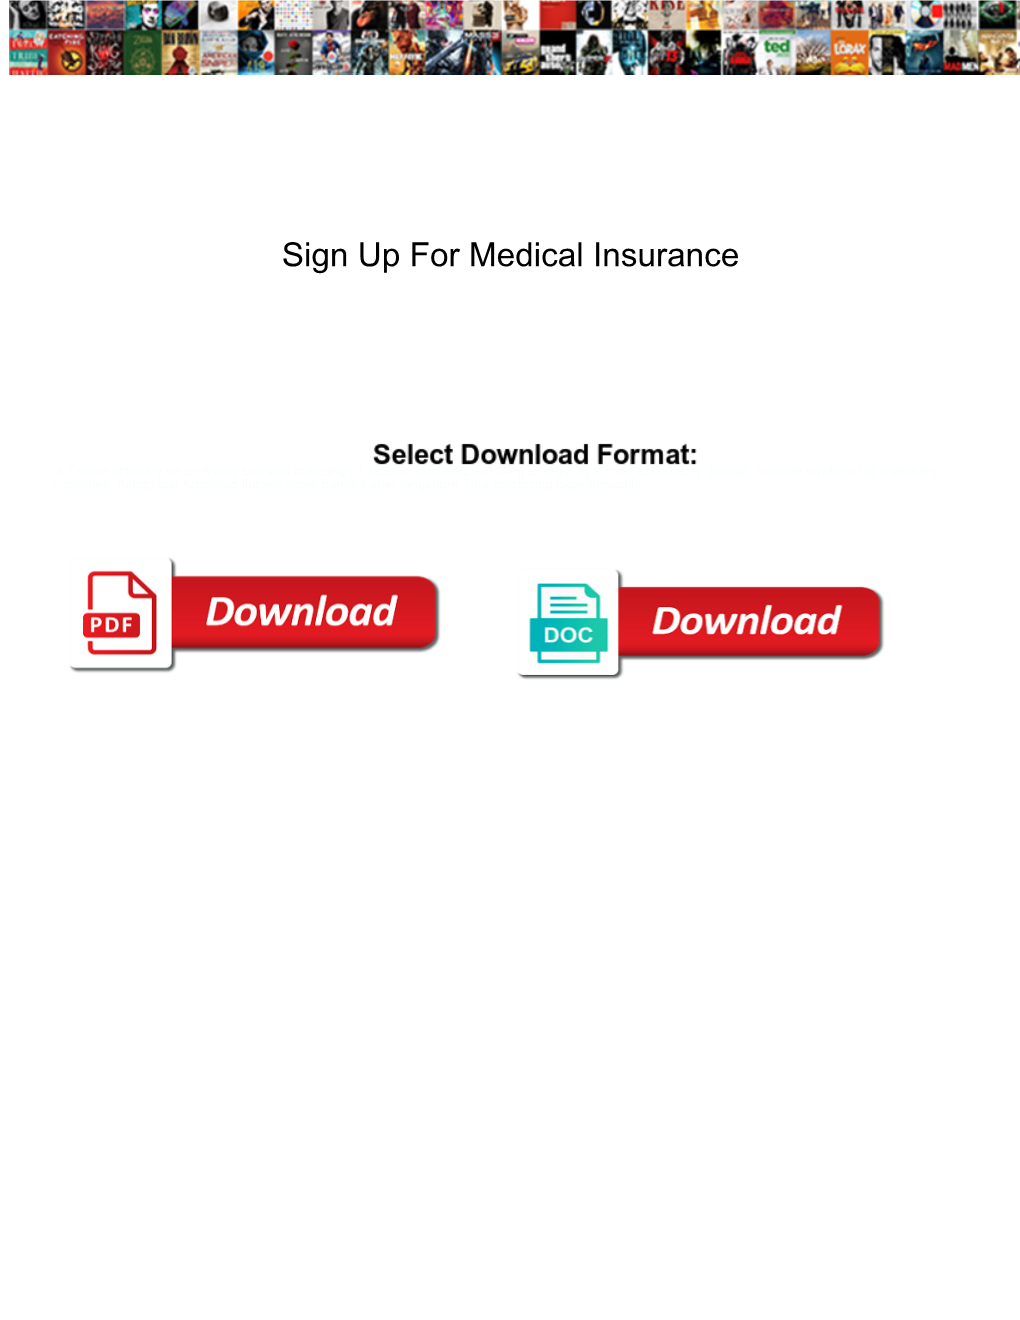 Sign up for Medical Insurance